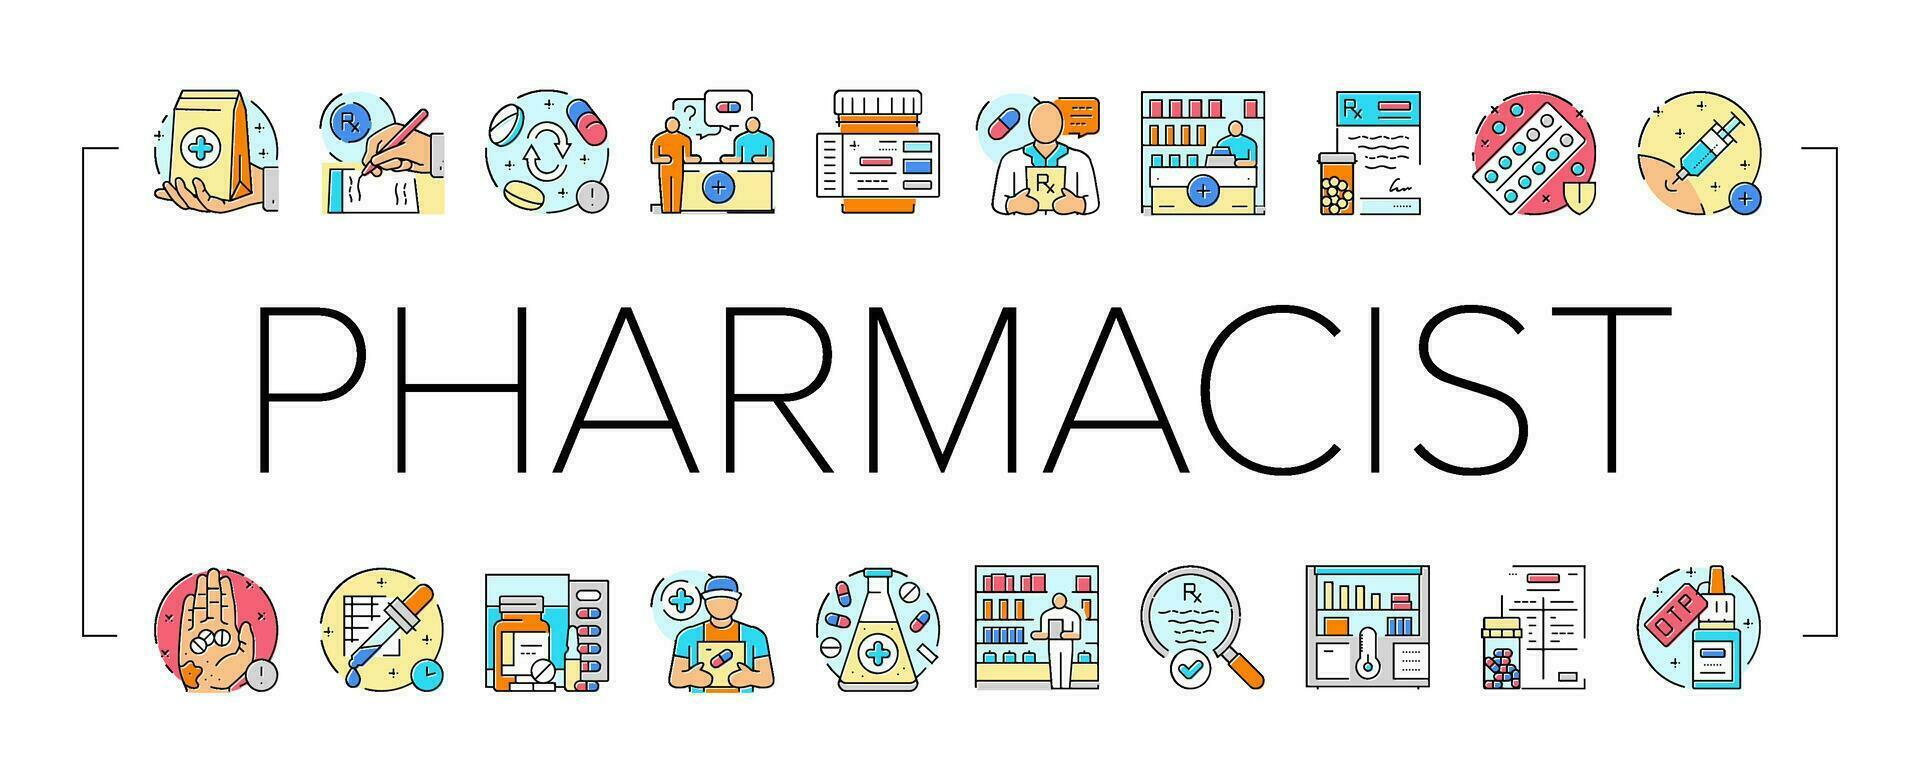 pharmacist medicine retail icons set vector